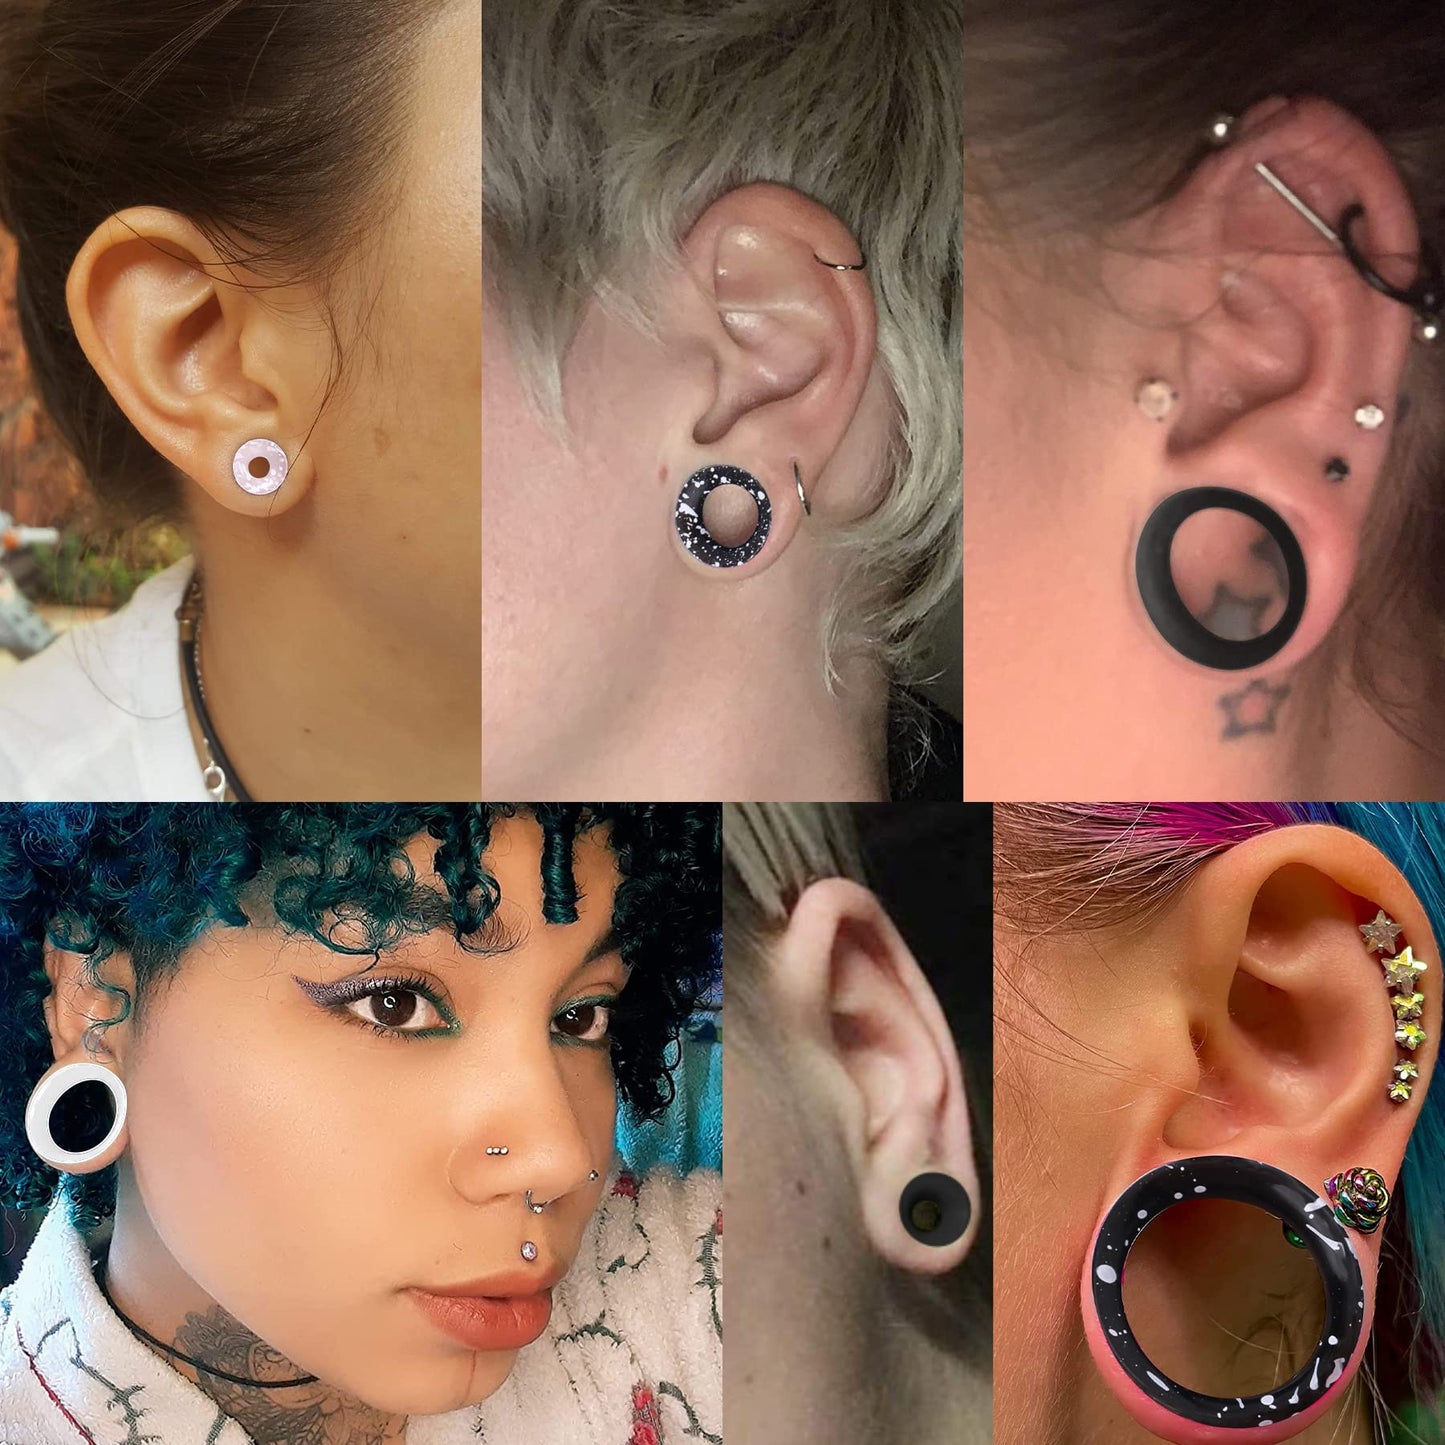 OUFER 8PCS Silicone Ear Gauges Flexible Ear Tunnels Plugs Stretchers Expander Double Flared Flesh Ear Piercing Jewelry for Women Men